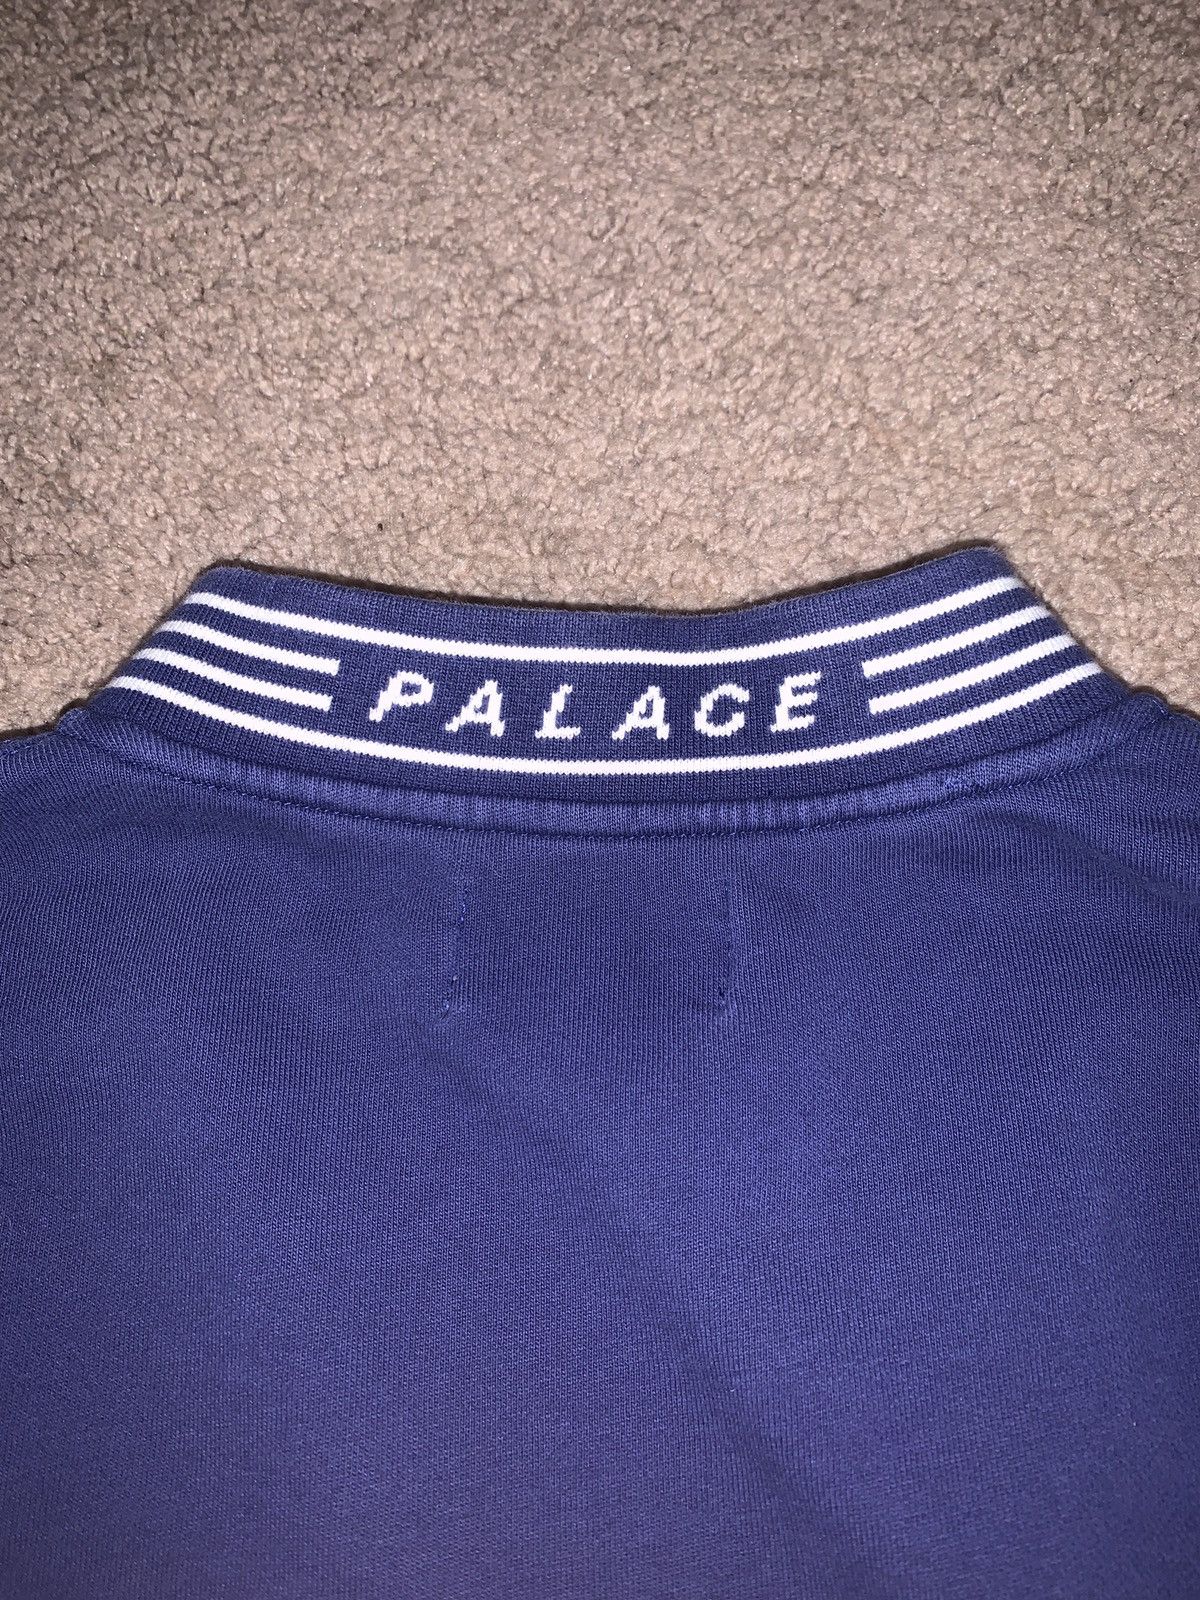 Palace Palace pullover sweater Size US S / EU 44-46 / 1 - 3 Thumbnail